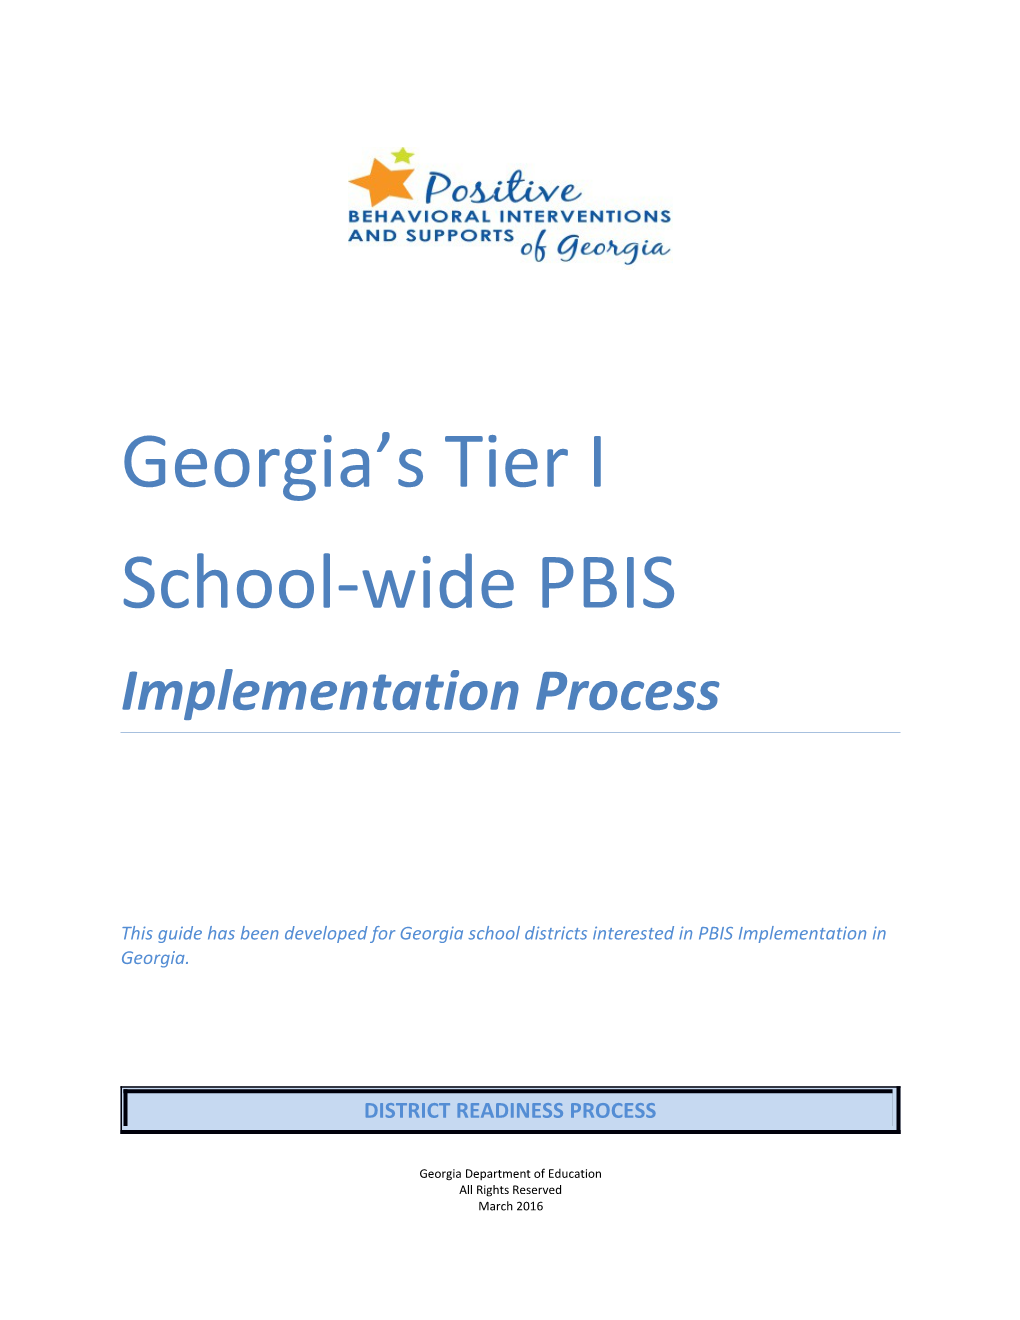 Implementation Process